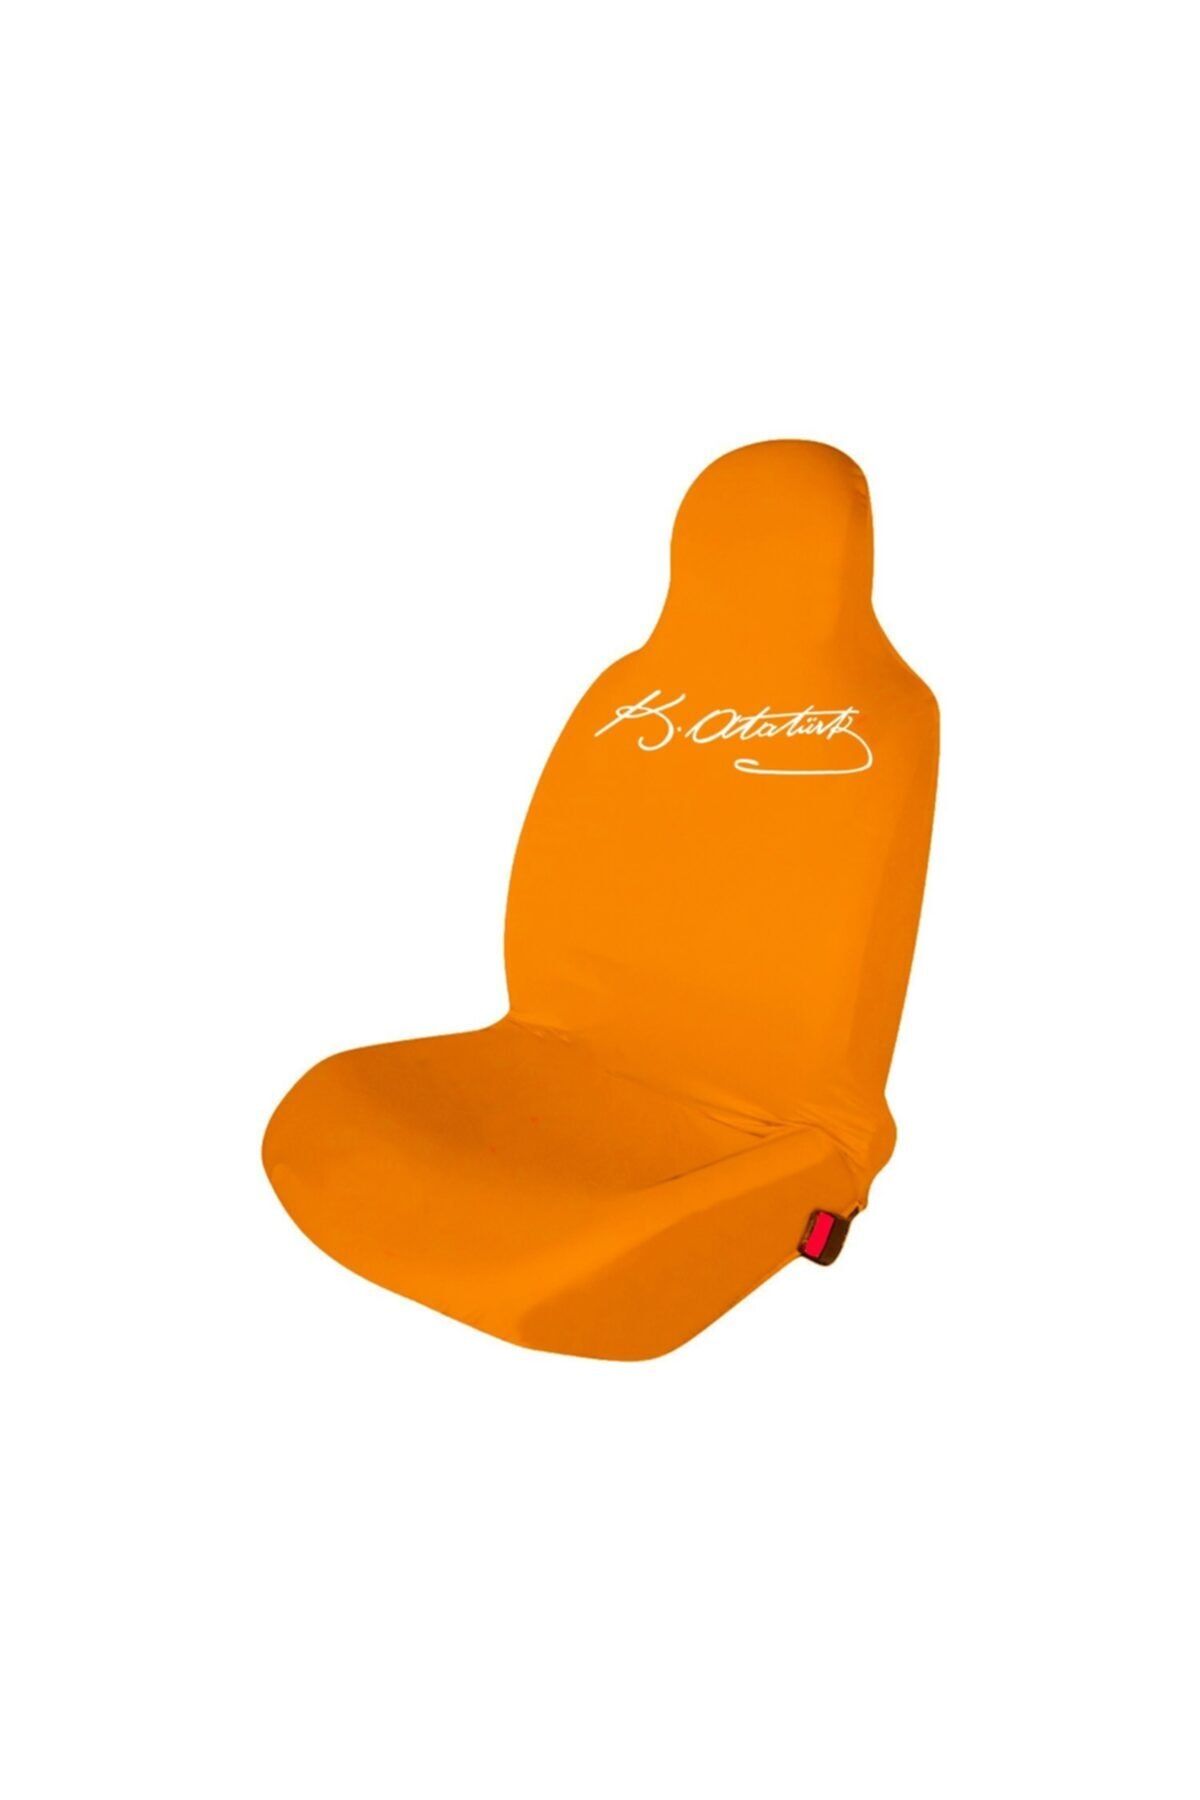 Özdemir Teks Opel Omega Car Seat Cover K.atatürk Printed Combed Cotton  Service Cover Orange - Trendyol